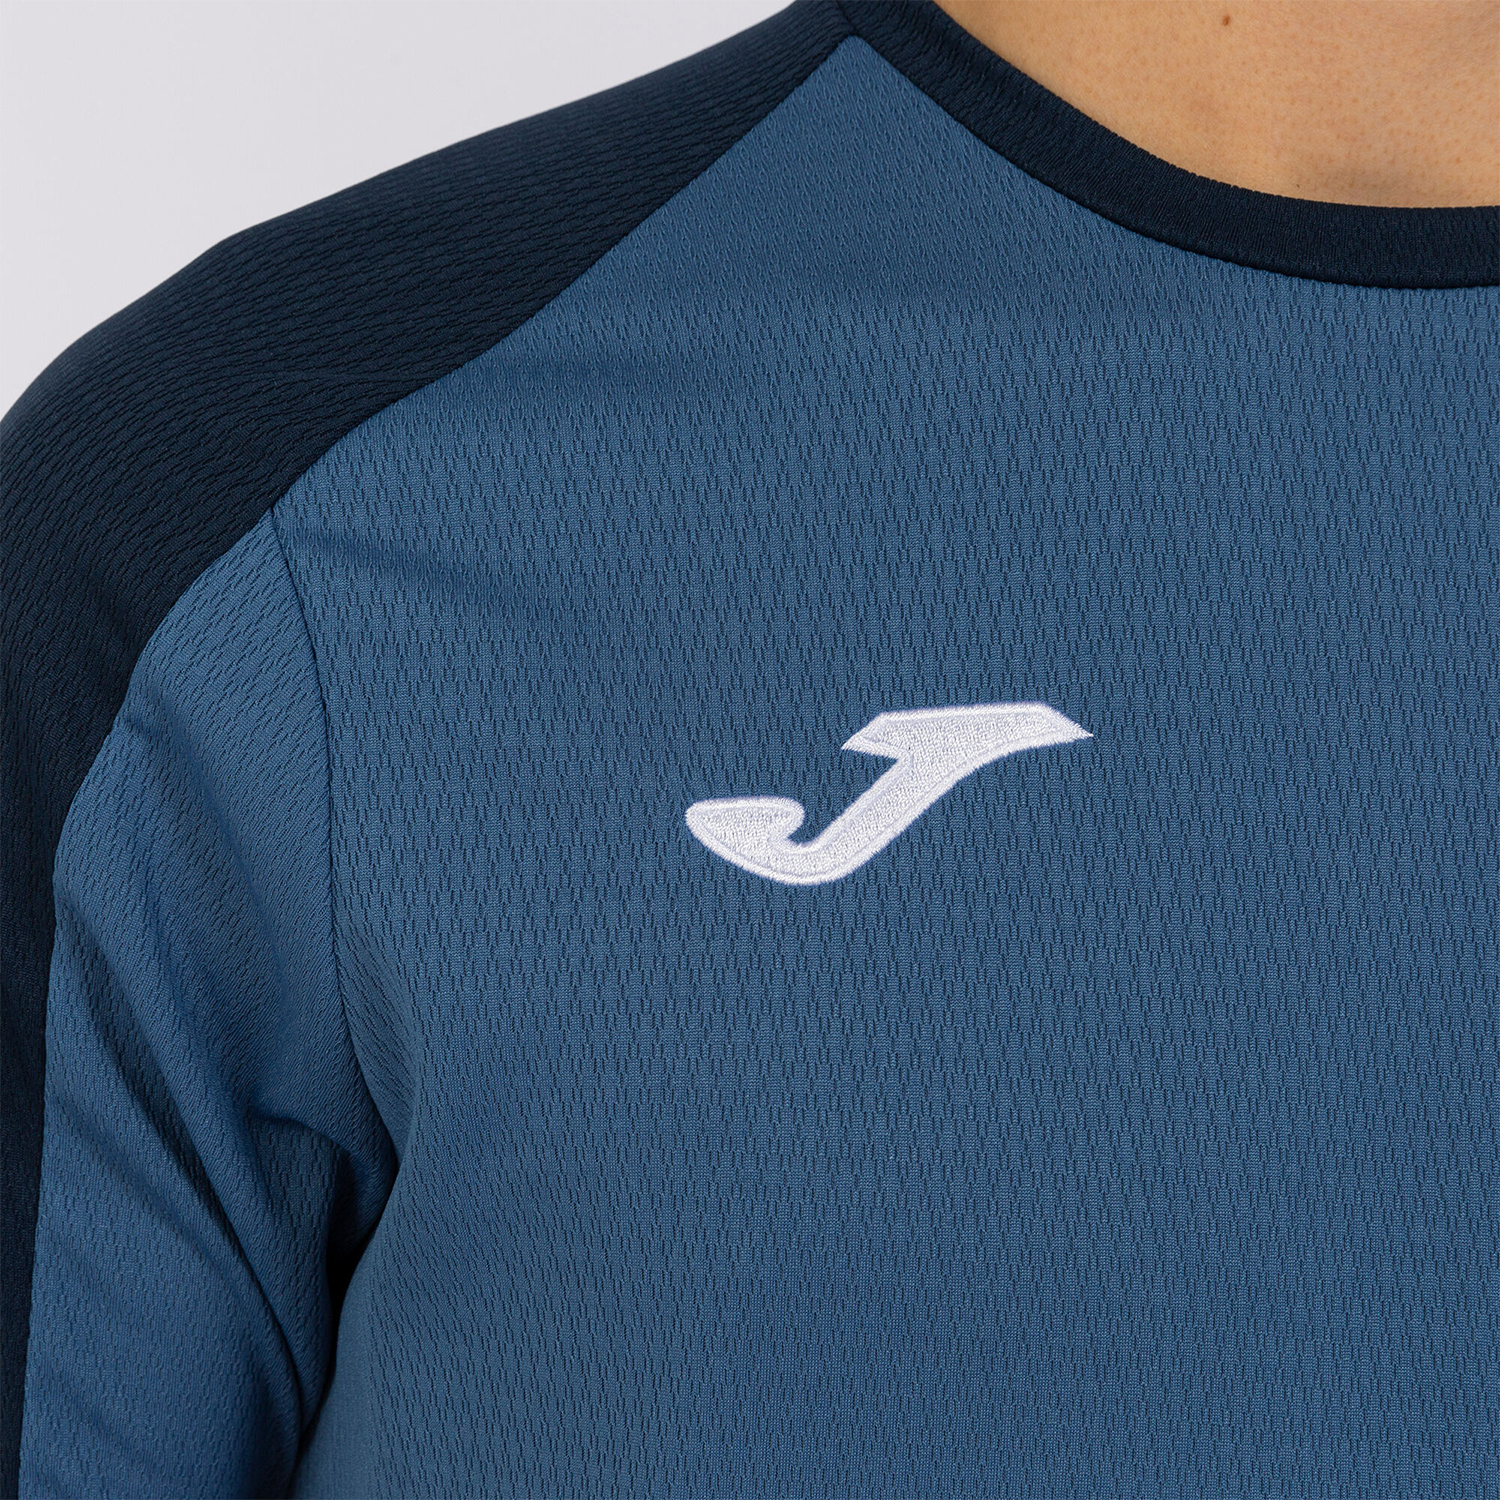 Joma Eco Championship T-Shirt - Blue/Navy